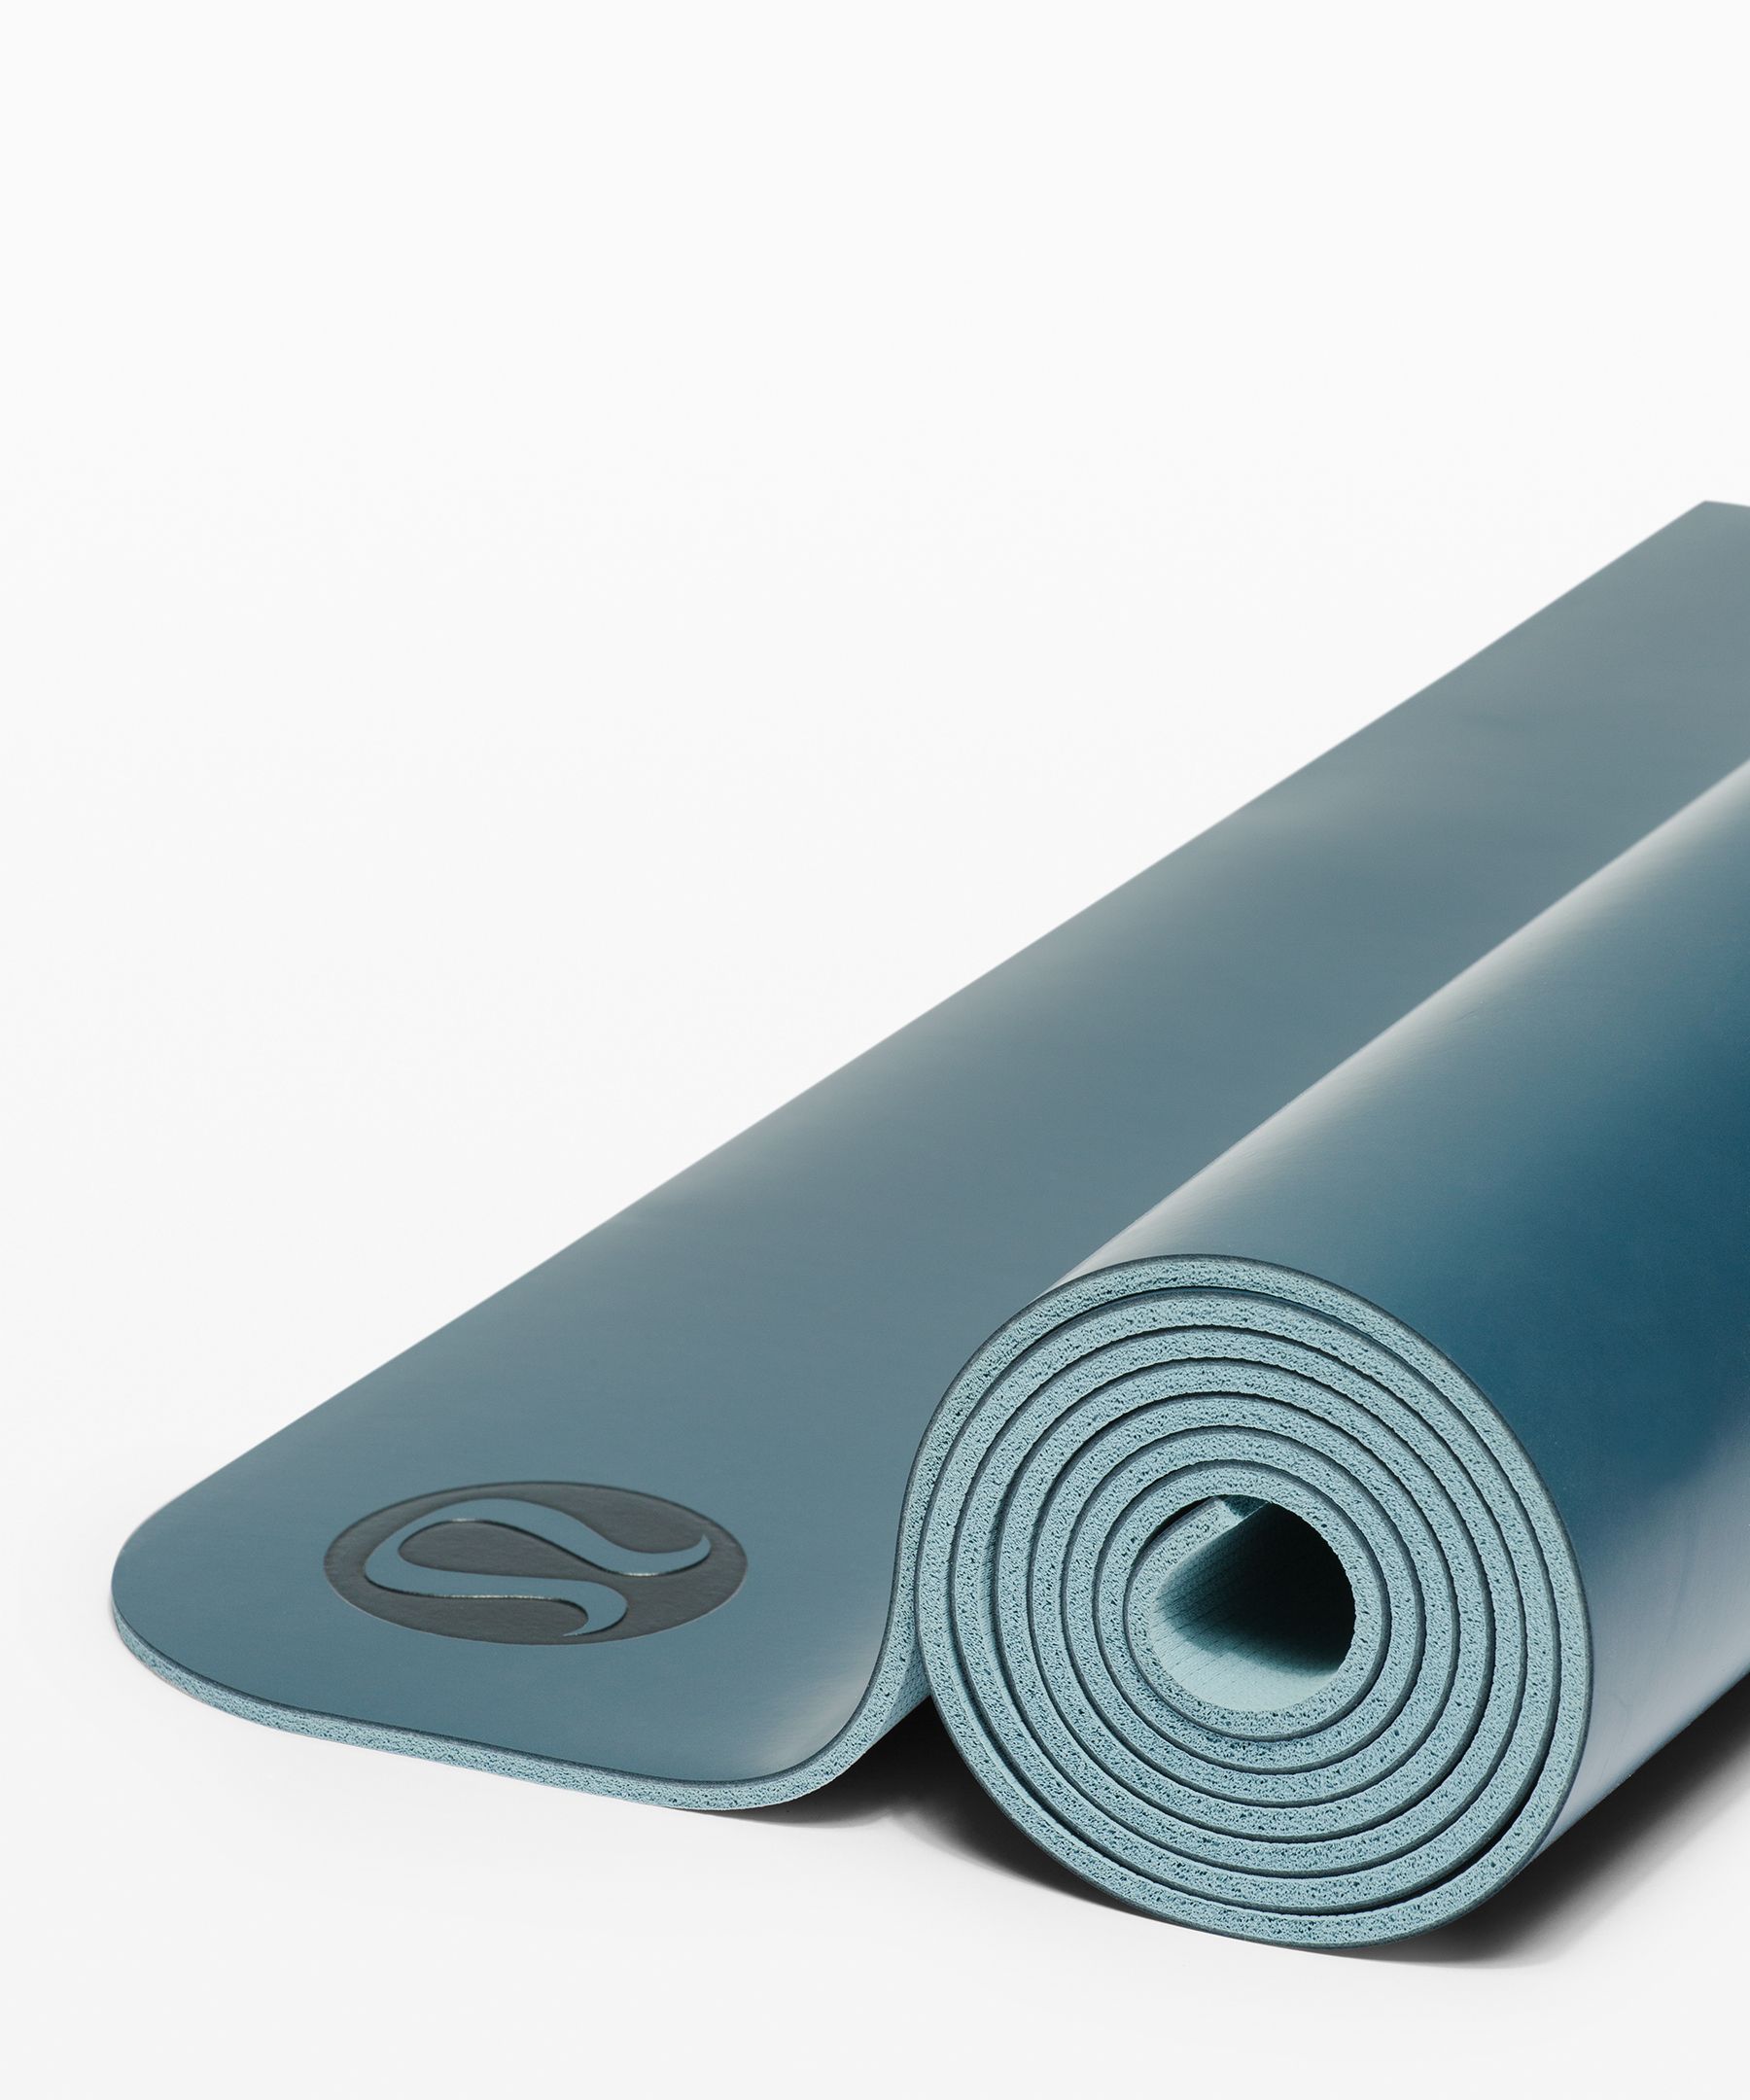 lululemon thick yoga mat